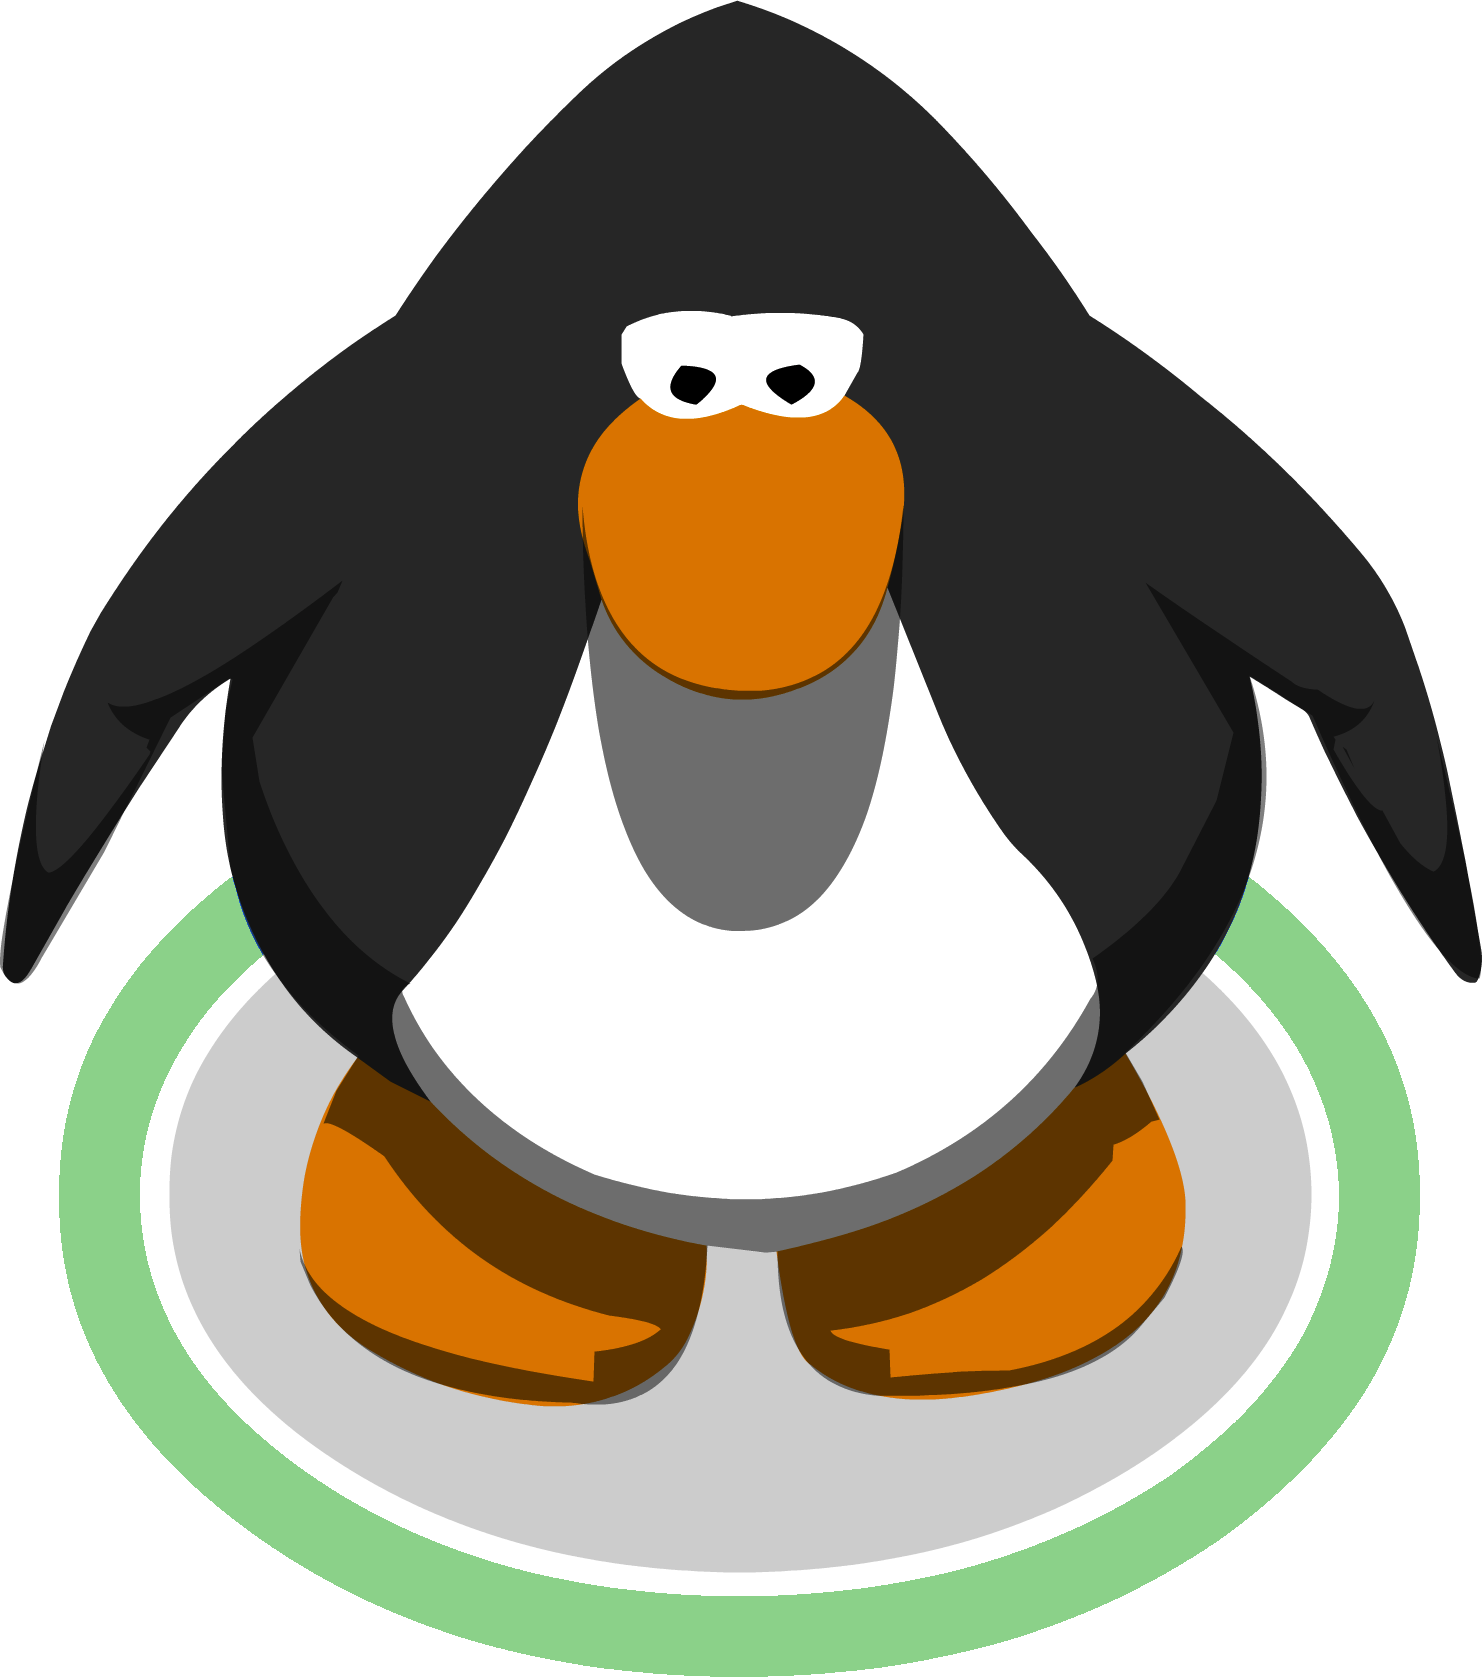 Green Circle - Club Penguin 3d Penguin (1482x1677)